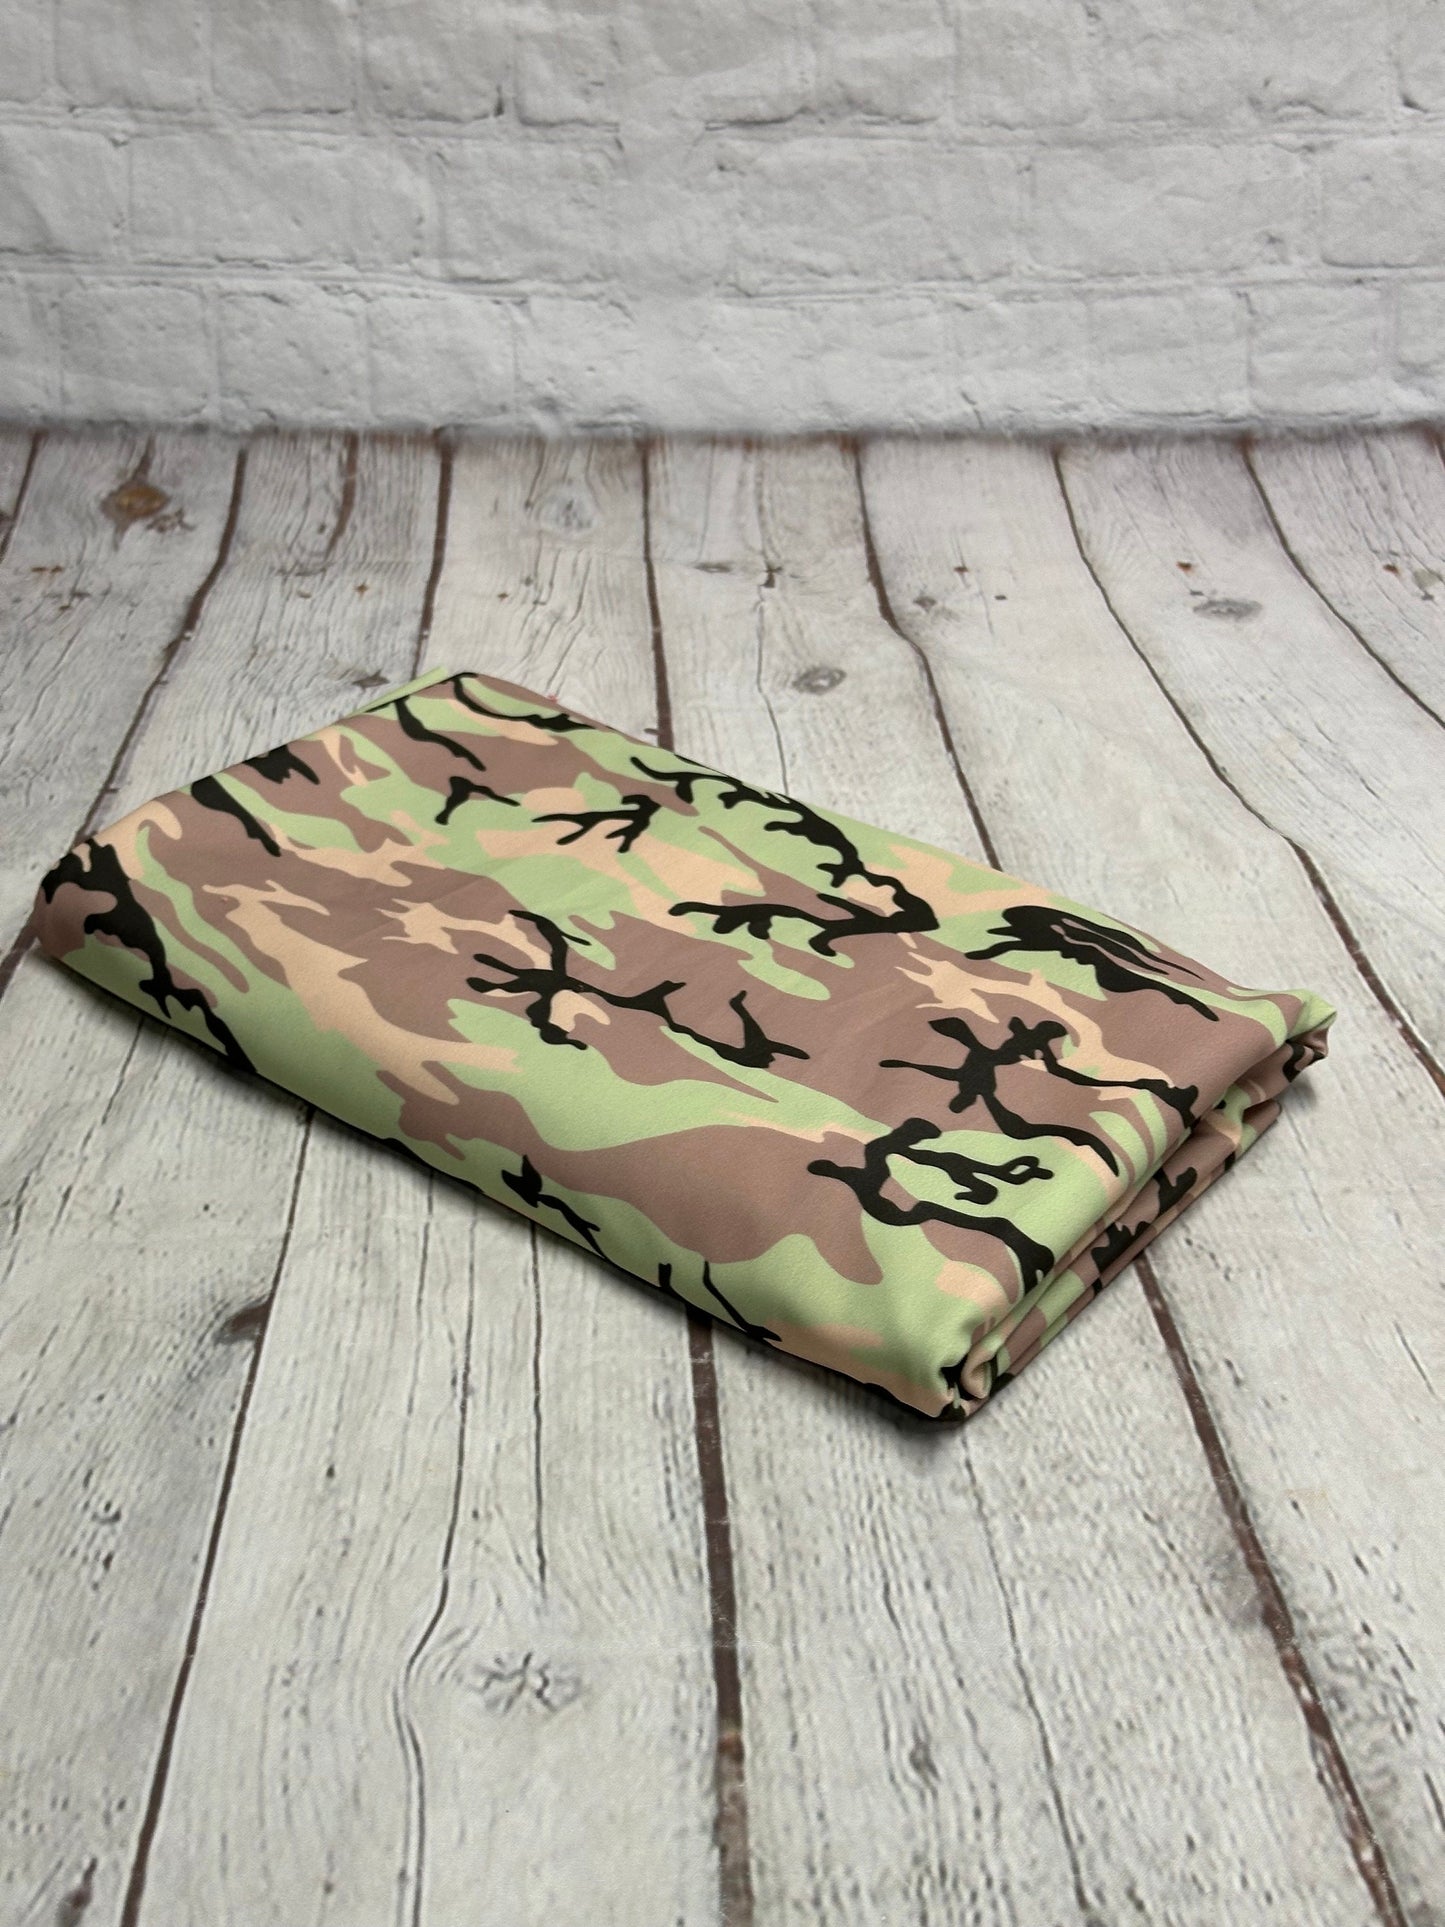 4 Way Stretch Print Nylon Spandex Fabric By The Yard Tricot Swim Wear Bikini Active Wear Camouflage Army Camo Green Tan